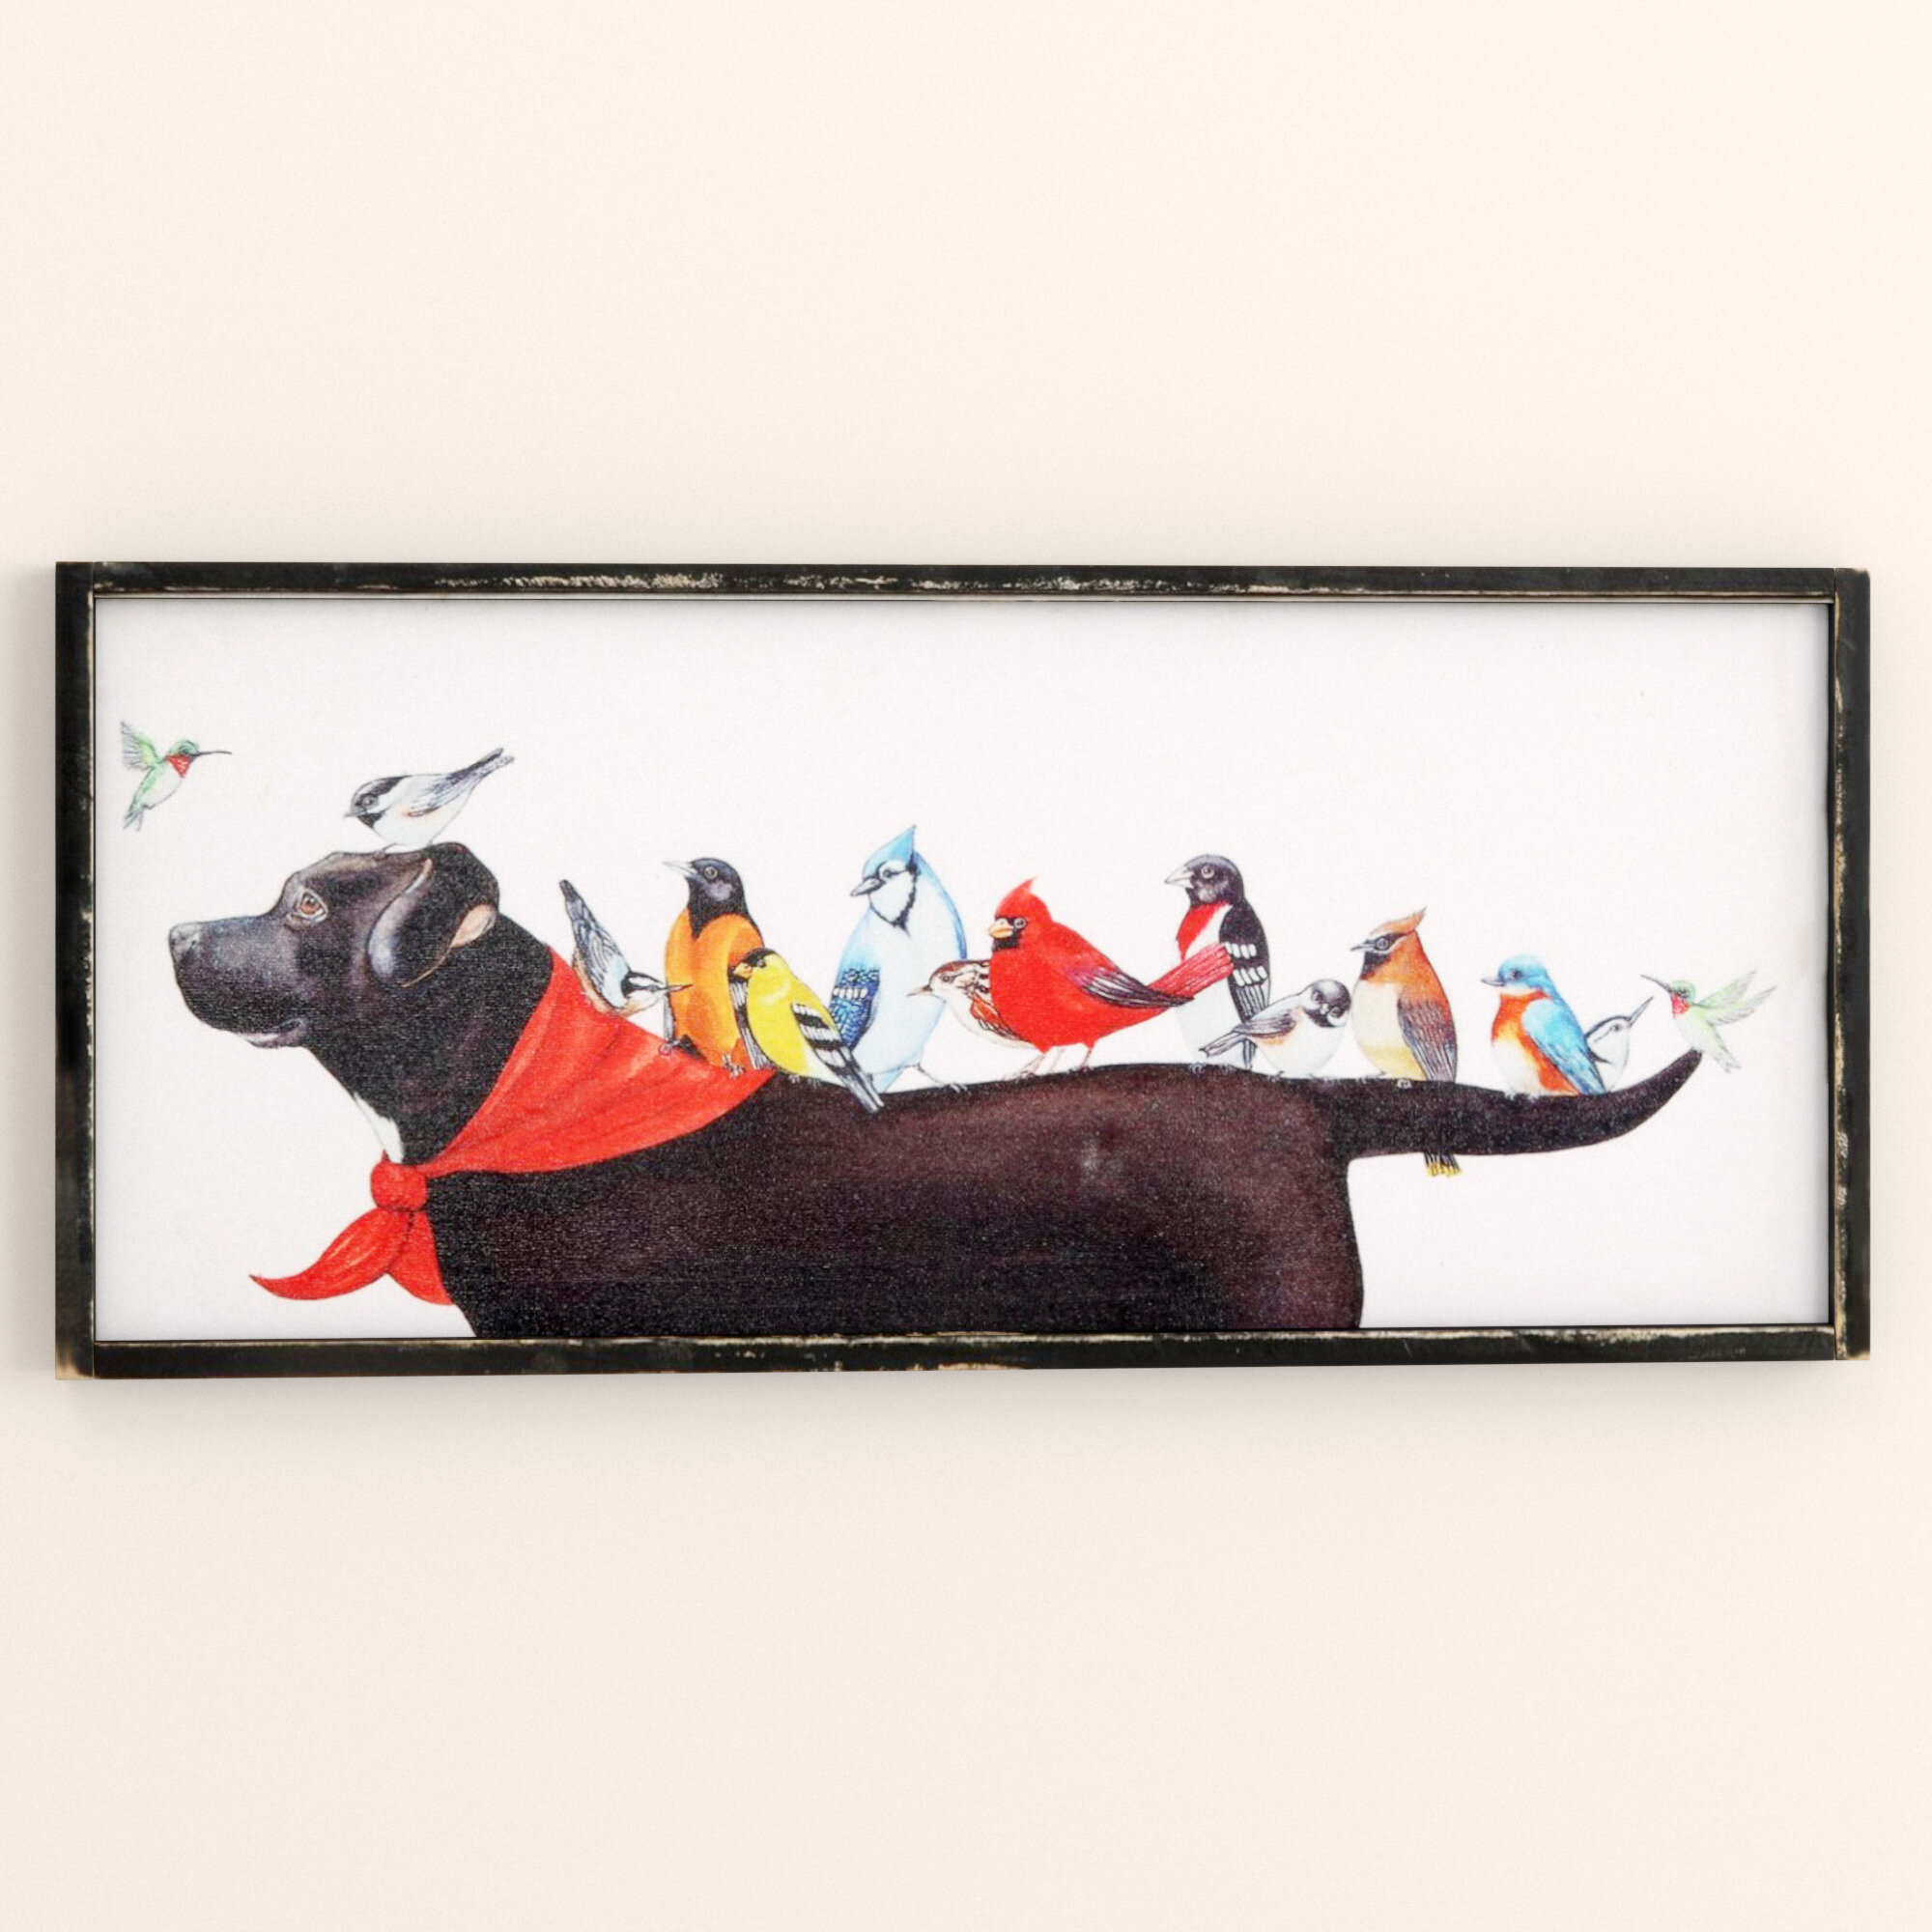 C Poster Happy Dog Art Print / Canvas Print Wall Art Home Decor 